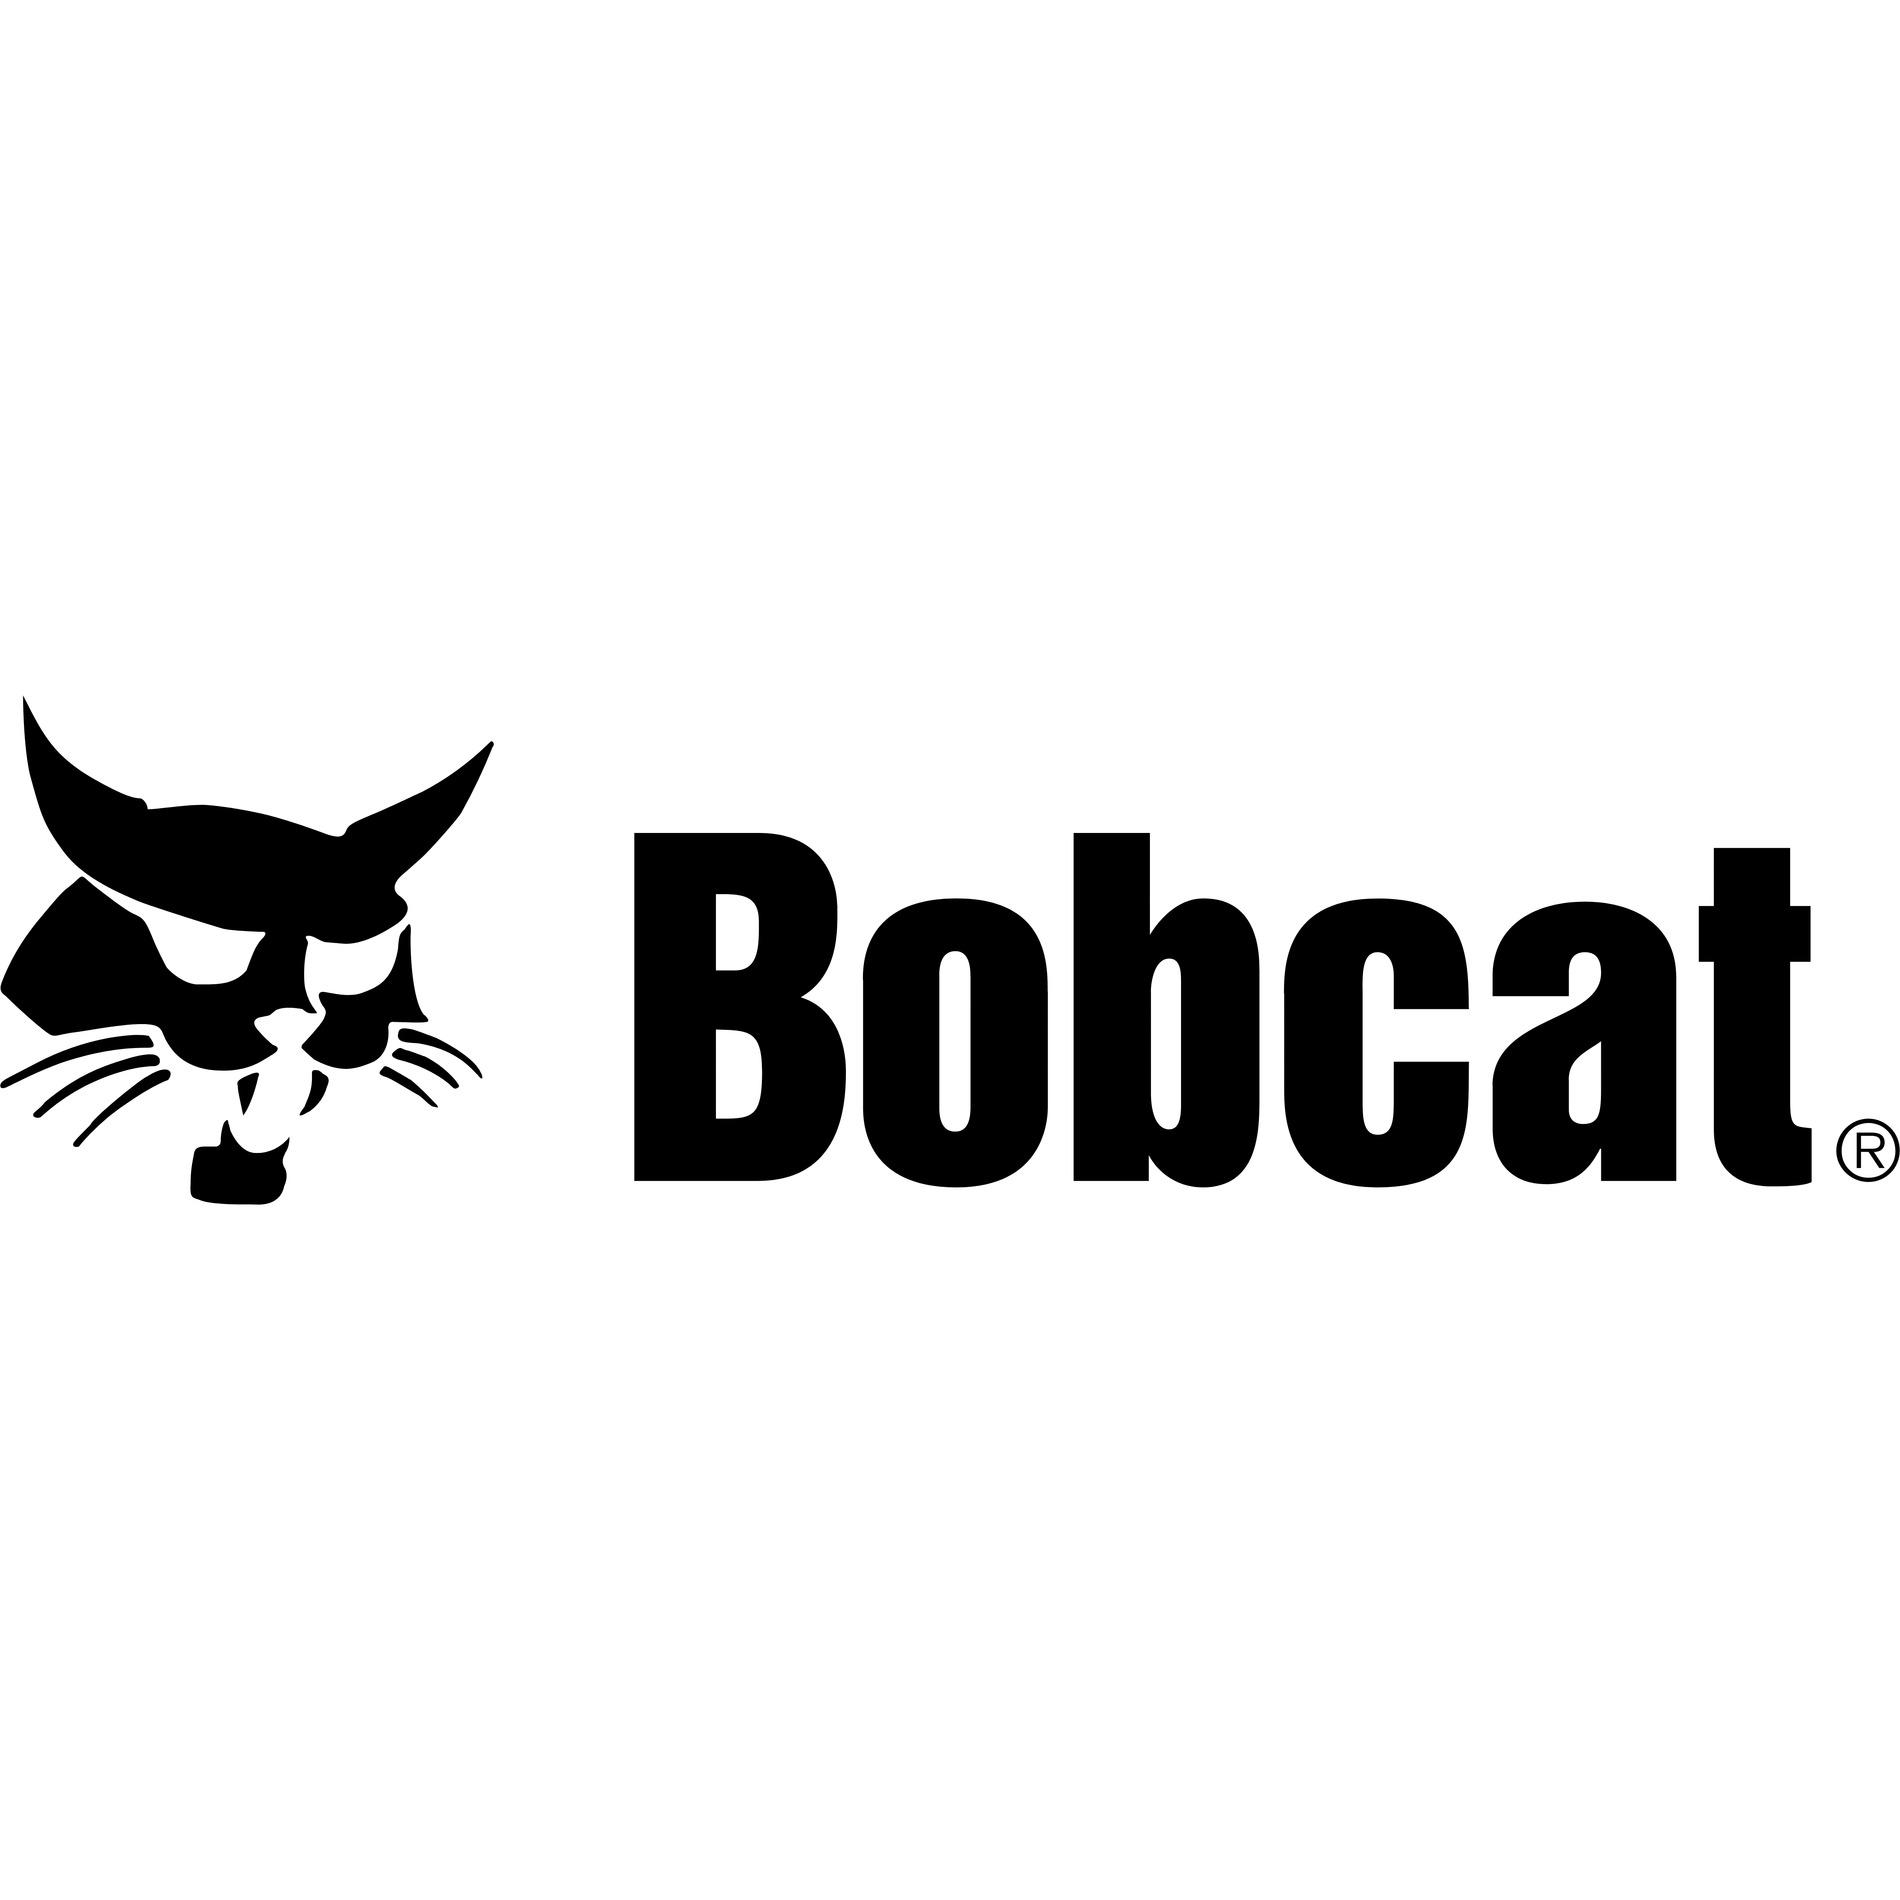 Bobcat of London, ltd.